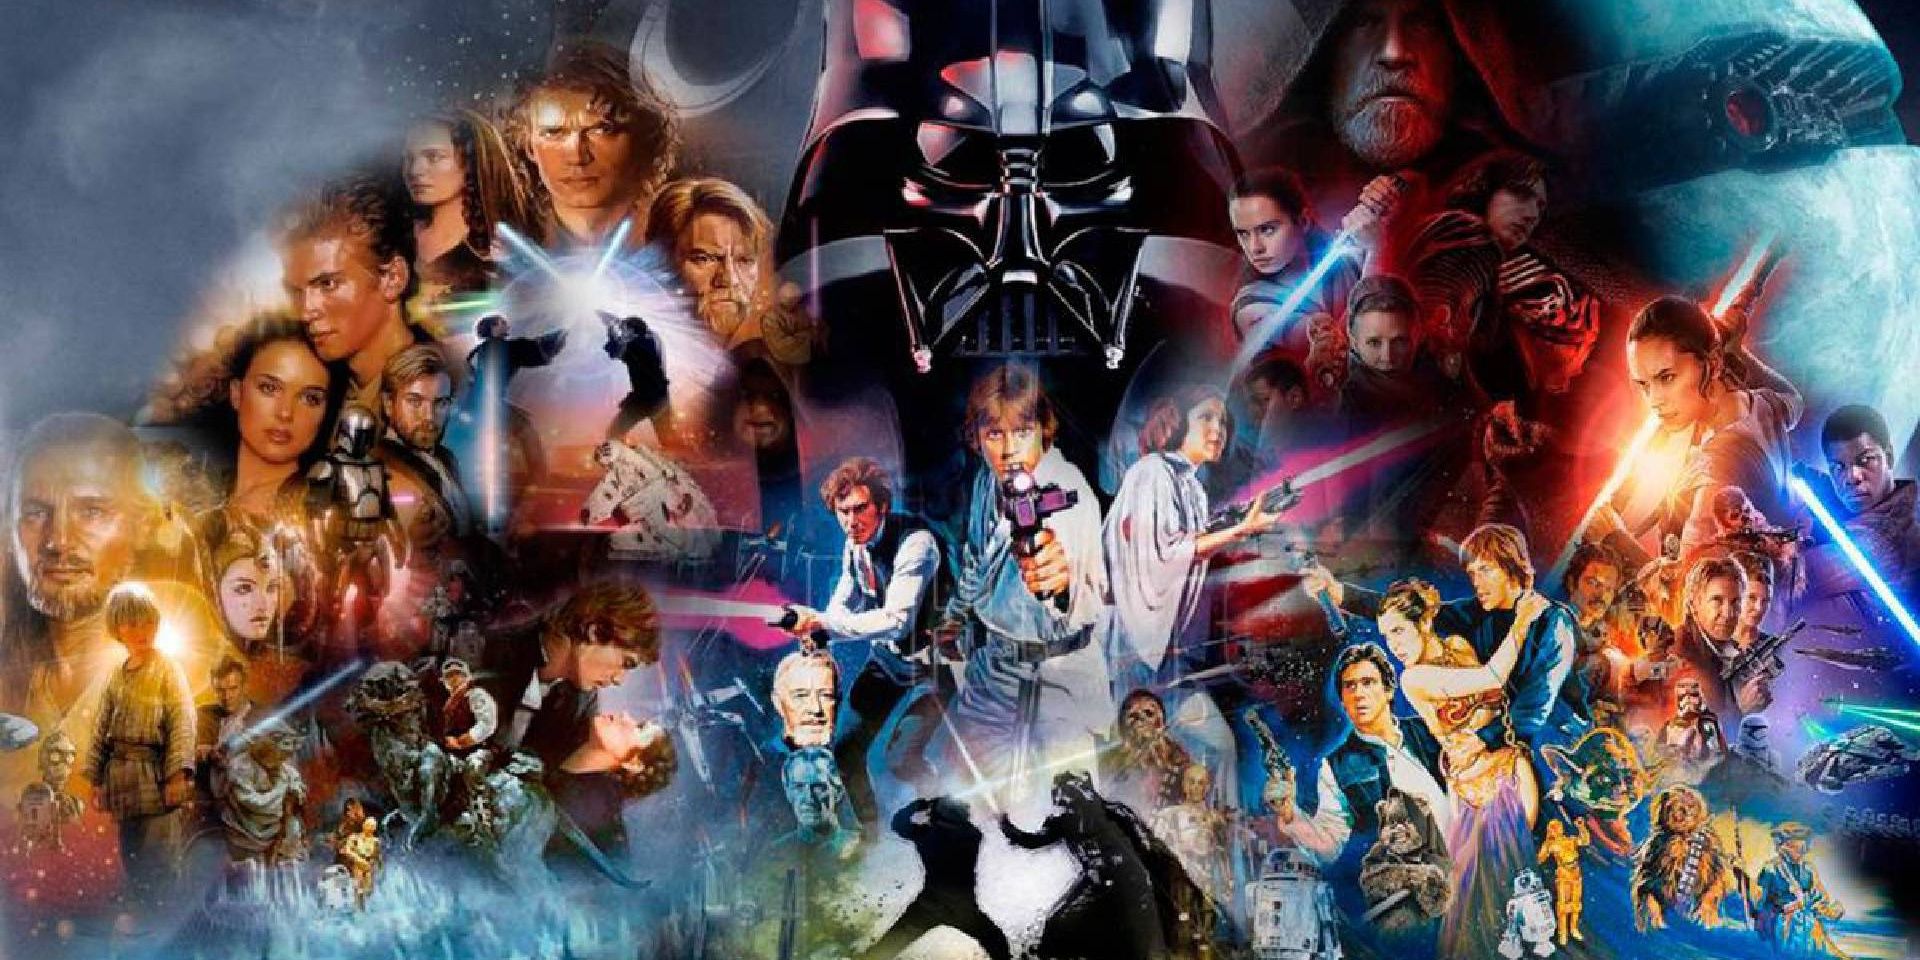 Collage of all Star Wars characters Luke Skywalker, Darth Vader, Rey, Han Solo, Obi-Wan, Leia